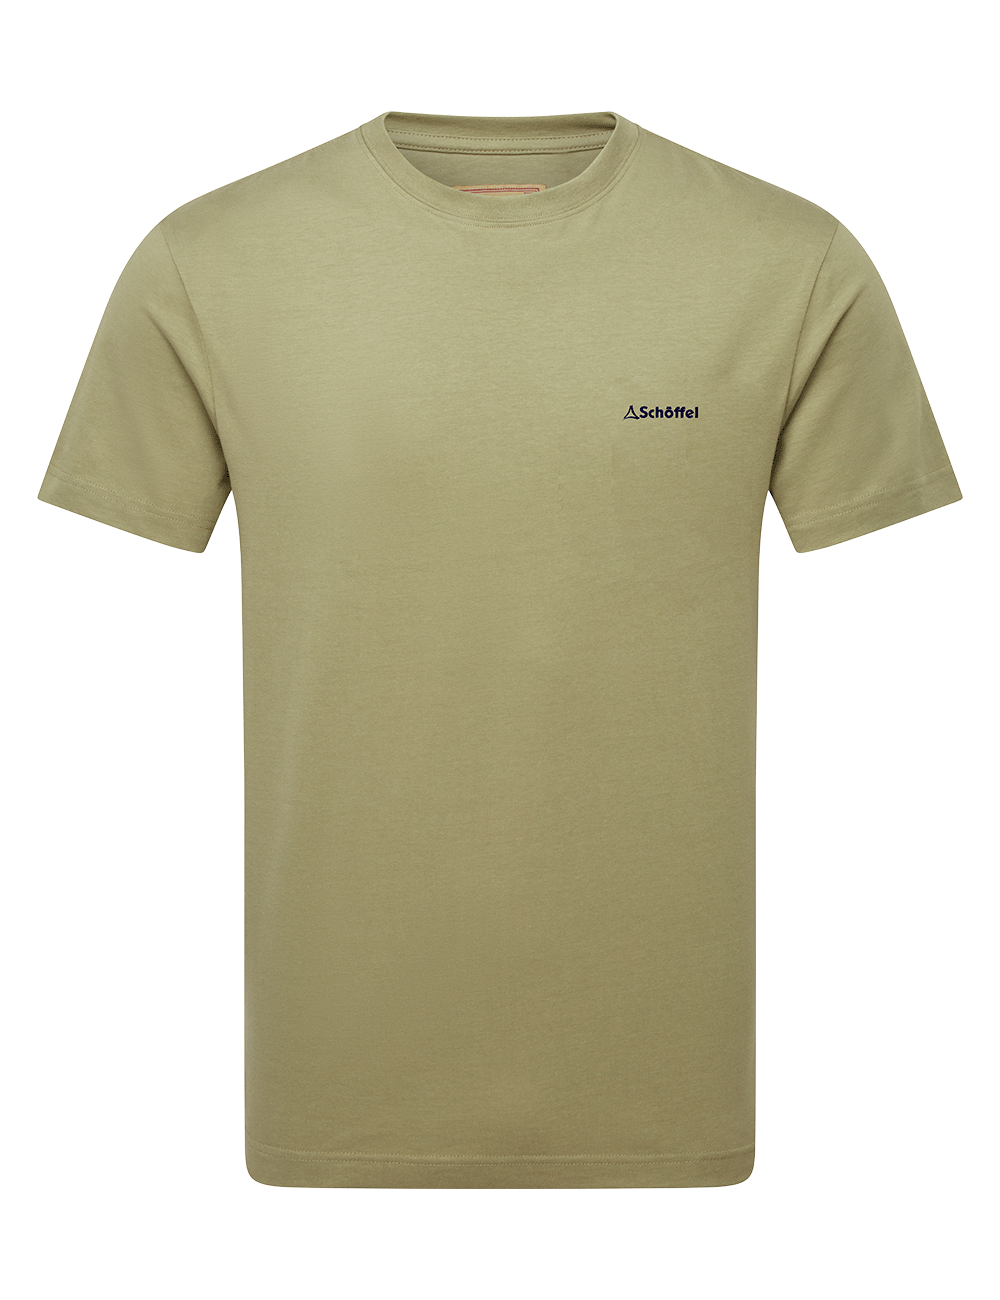 Schoffel Trevone T-Shirt - Light Khaki